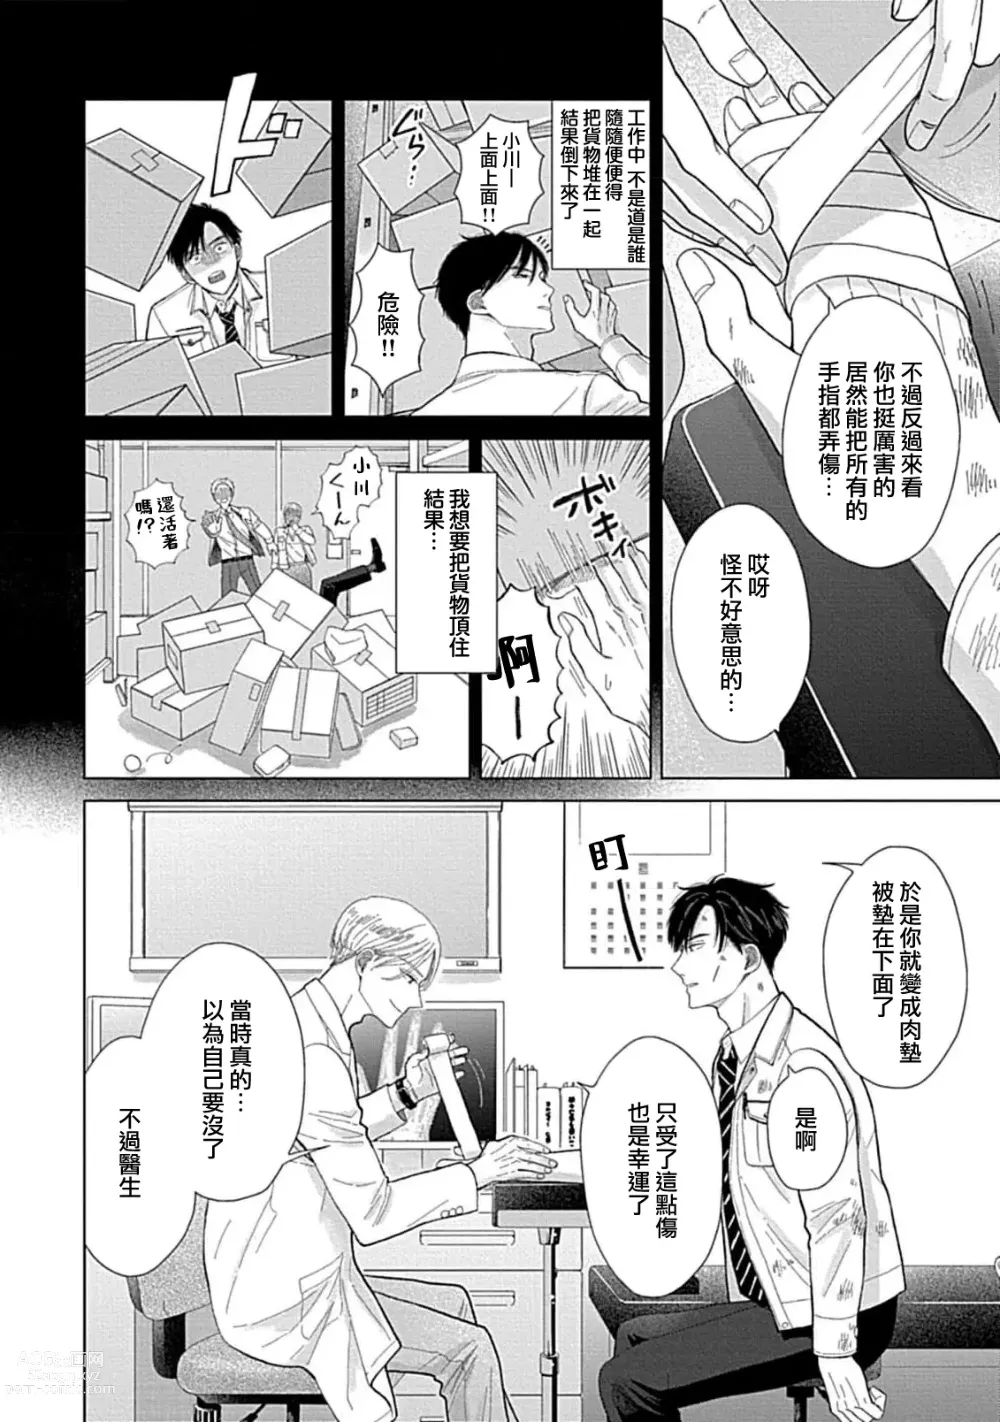 Page 6 of manga 并非不喜但请抱紧1